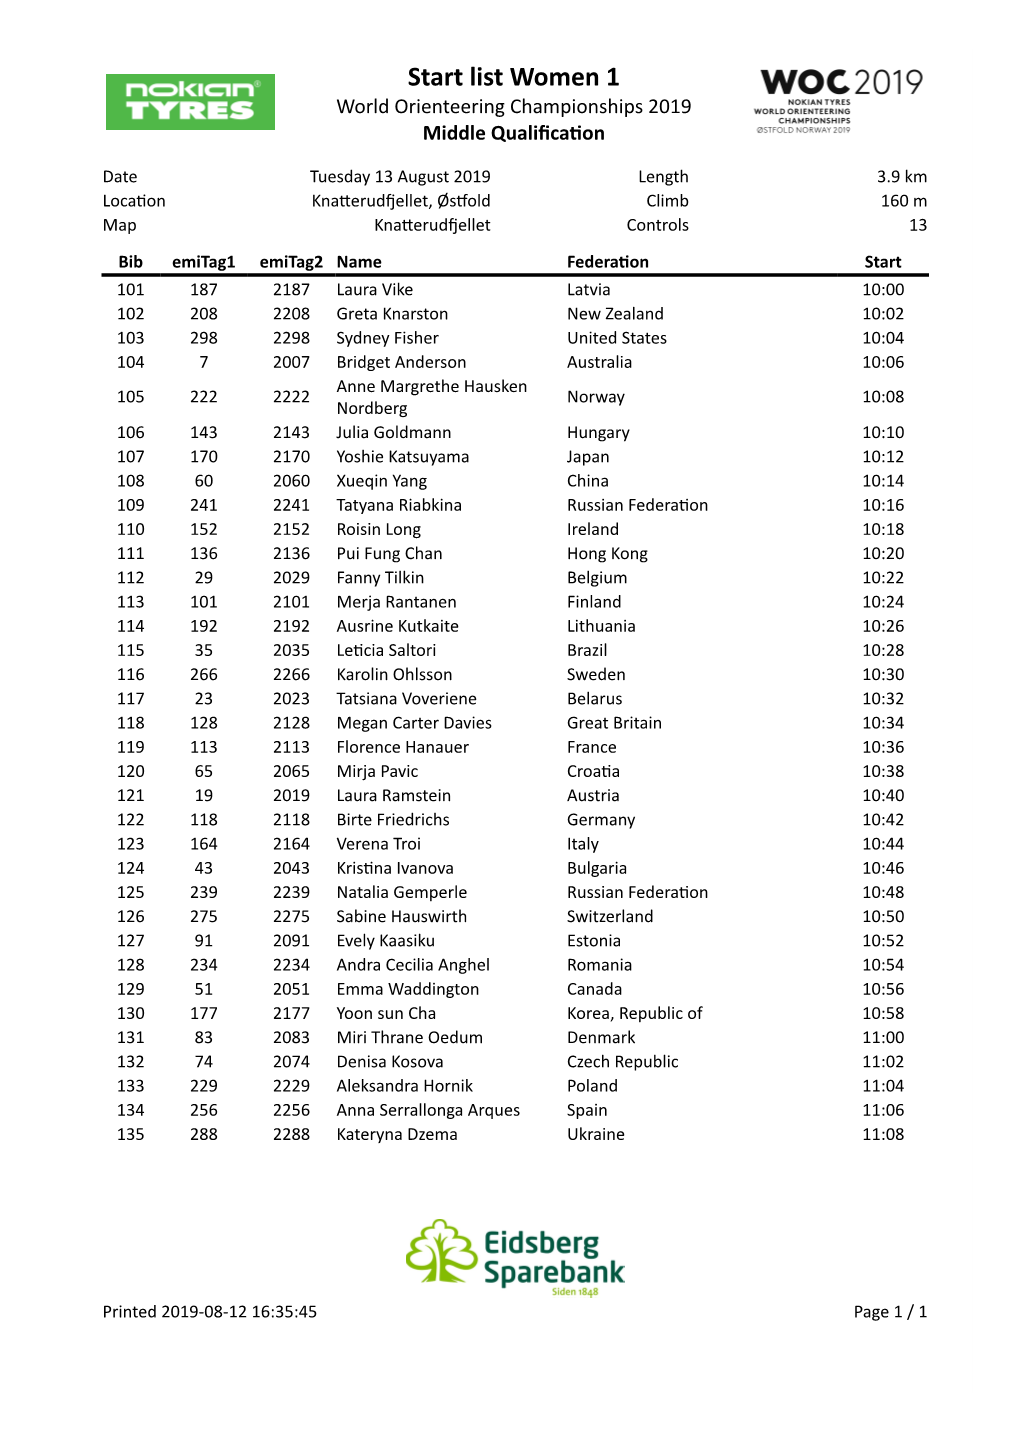 Start List Women 1 World Orienteering Championships 2019 Middle Qualiﬁca�On